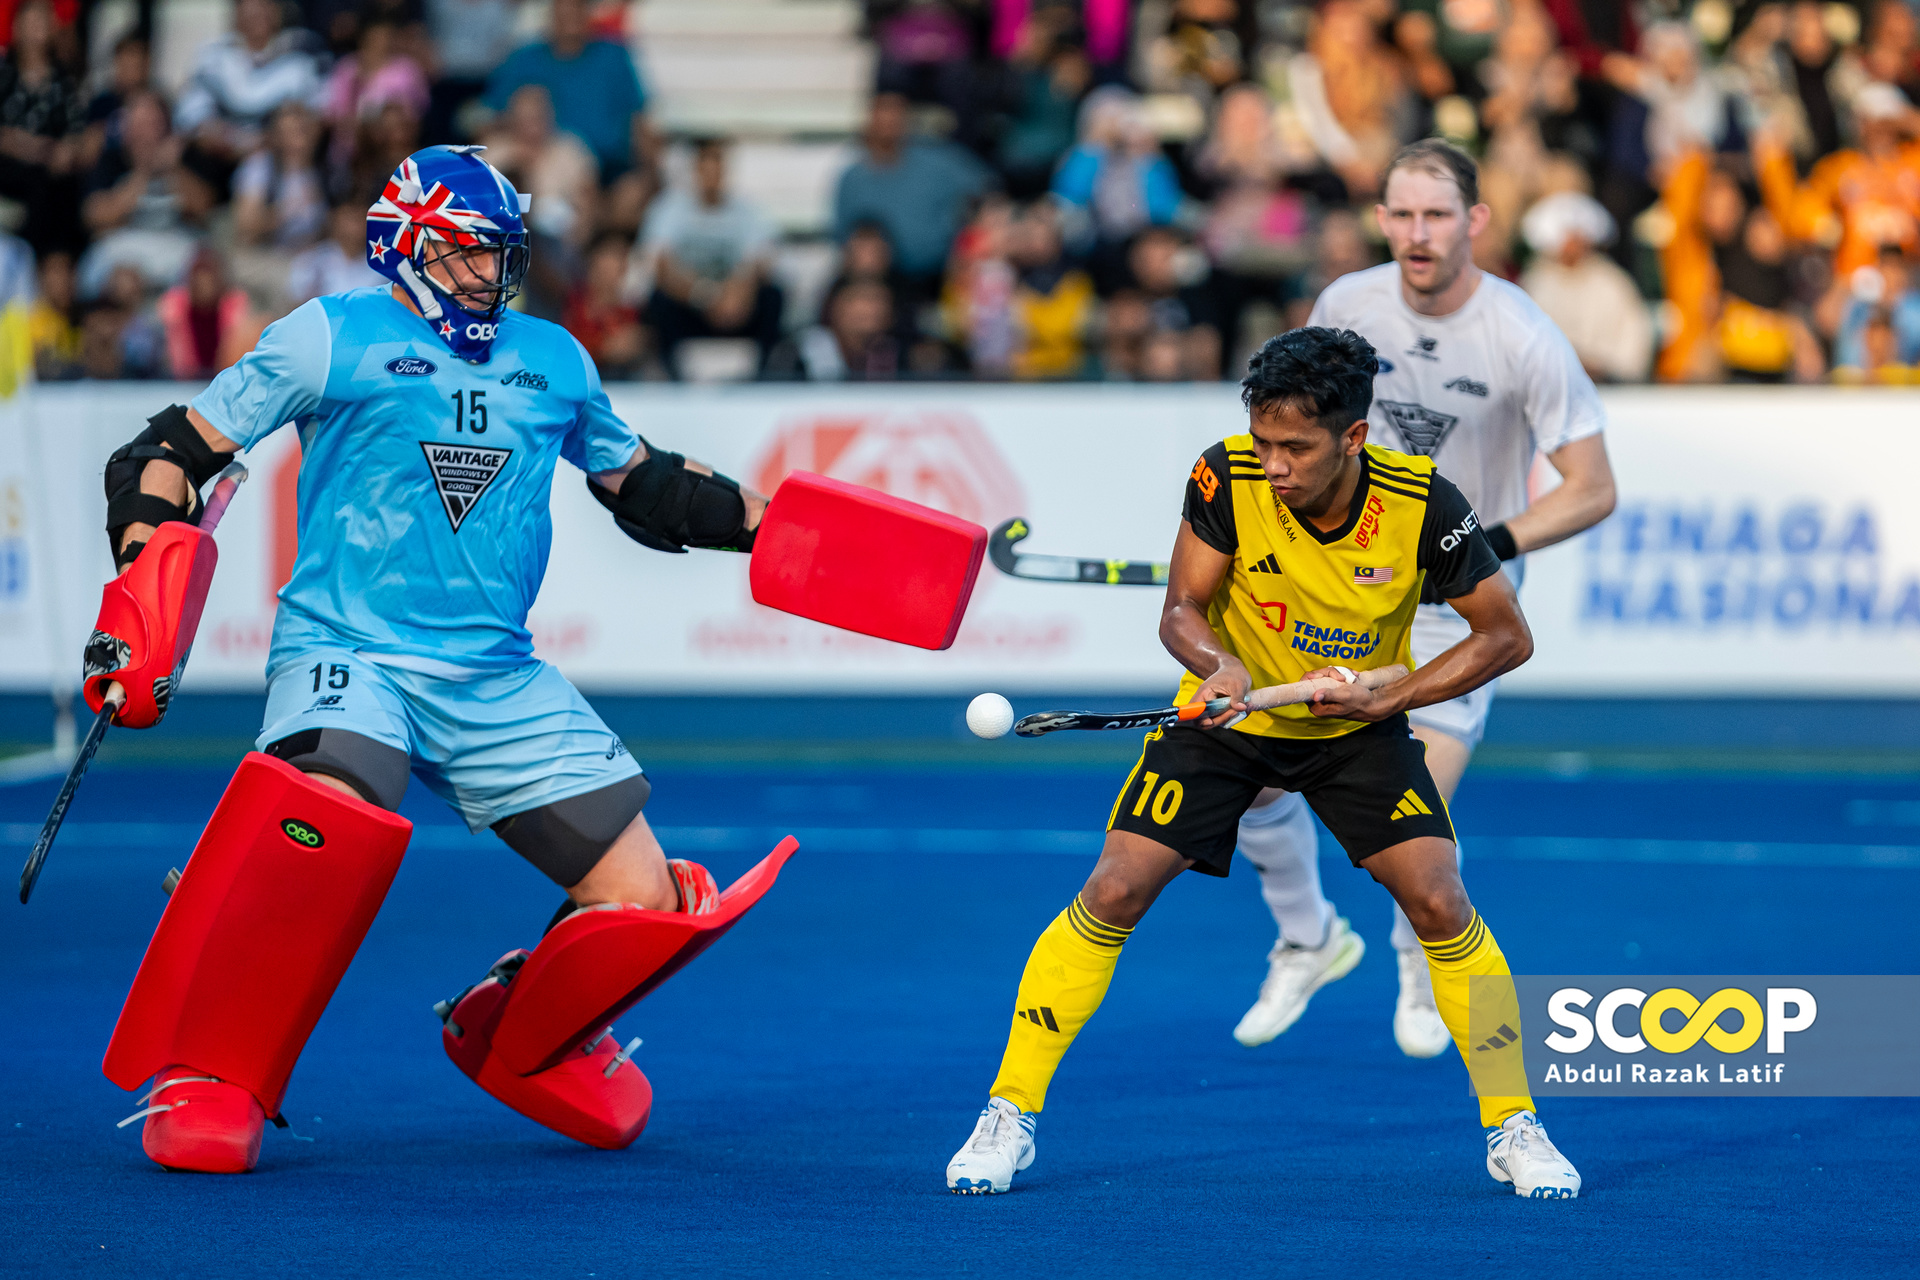 Sultan Azlan Shah Cup: Speedy Tigers’ speedy attacks mentally strained N. Zealand goalie